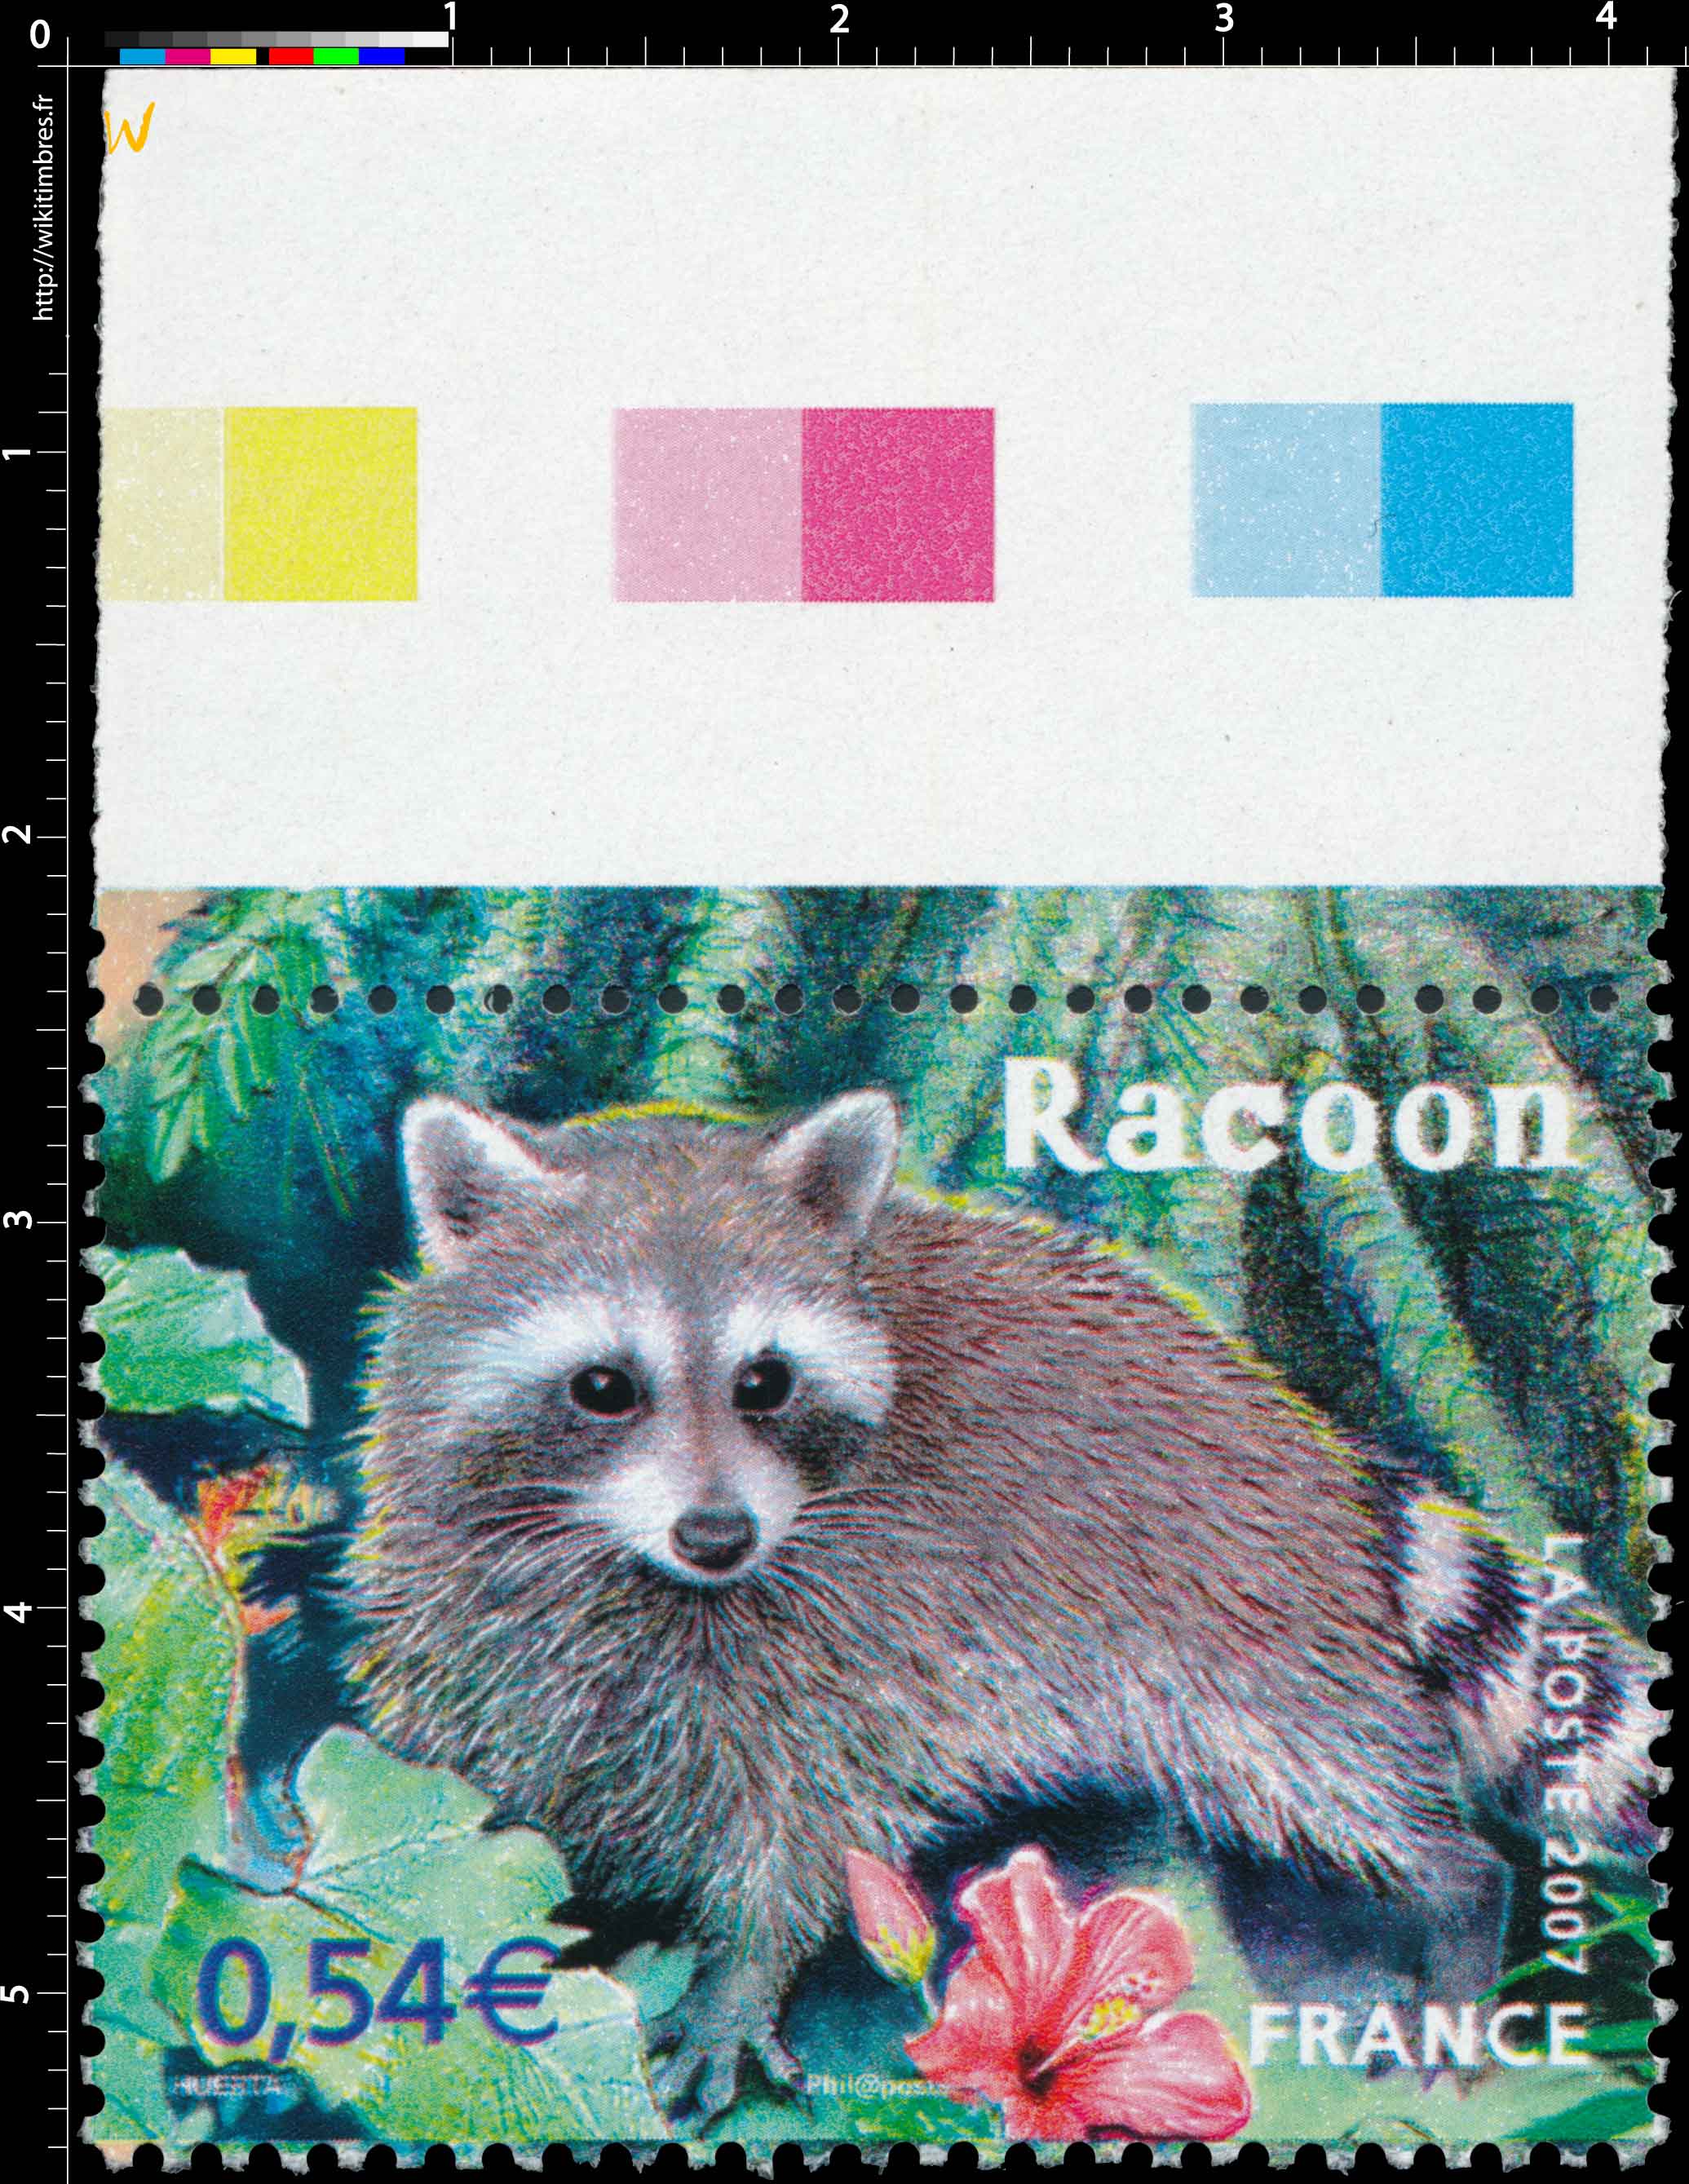 2007 Racoon